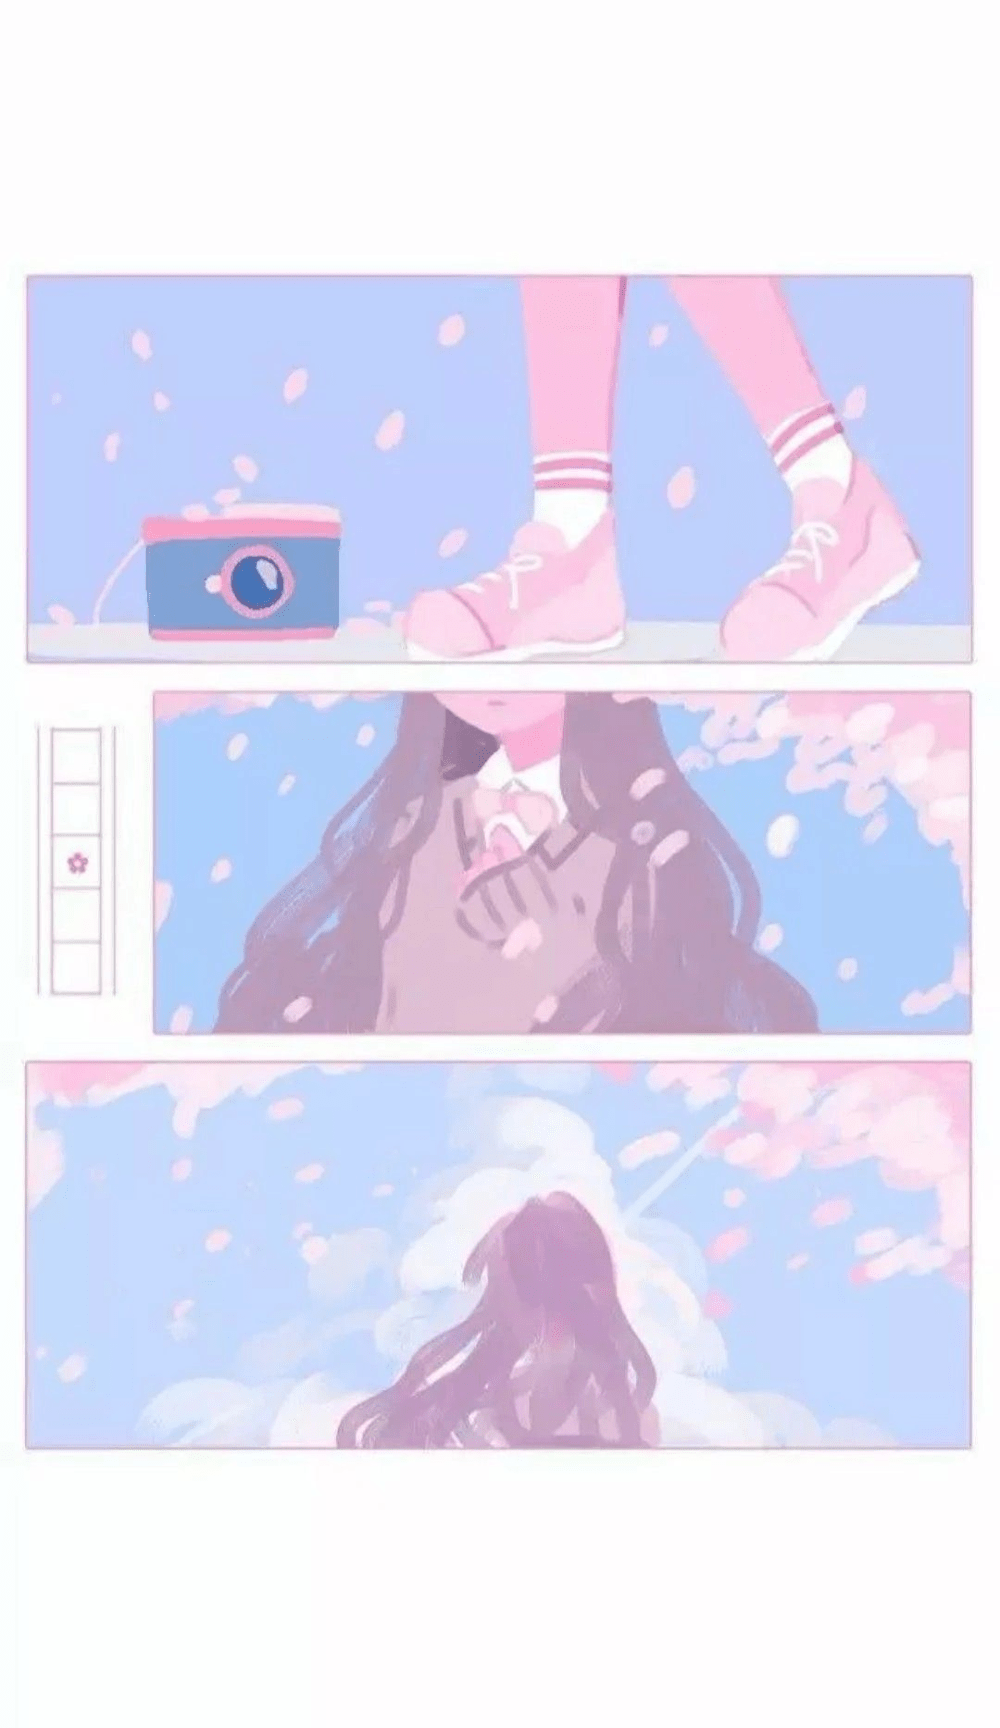 soft pink anime aesthetic edit - YouTube